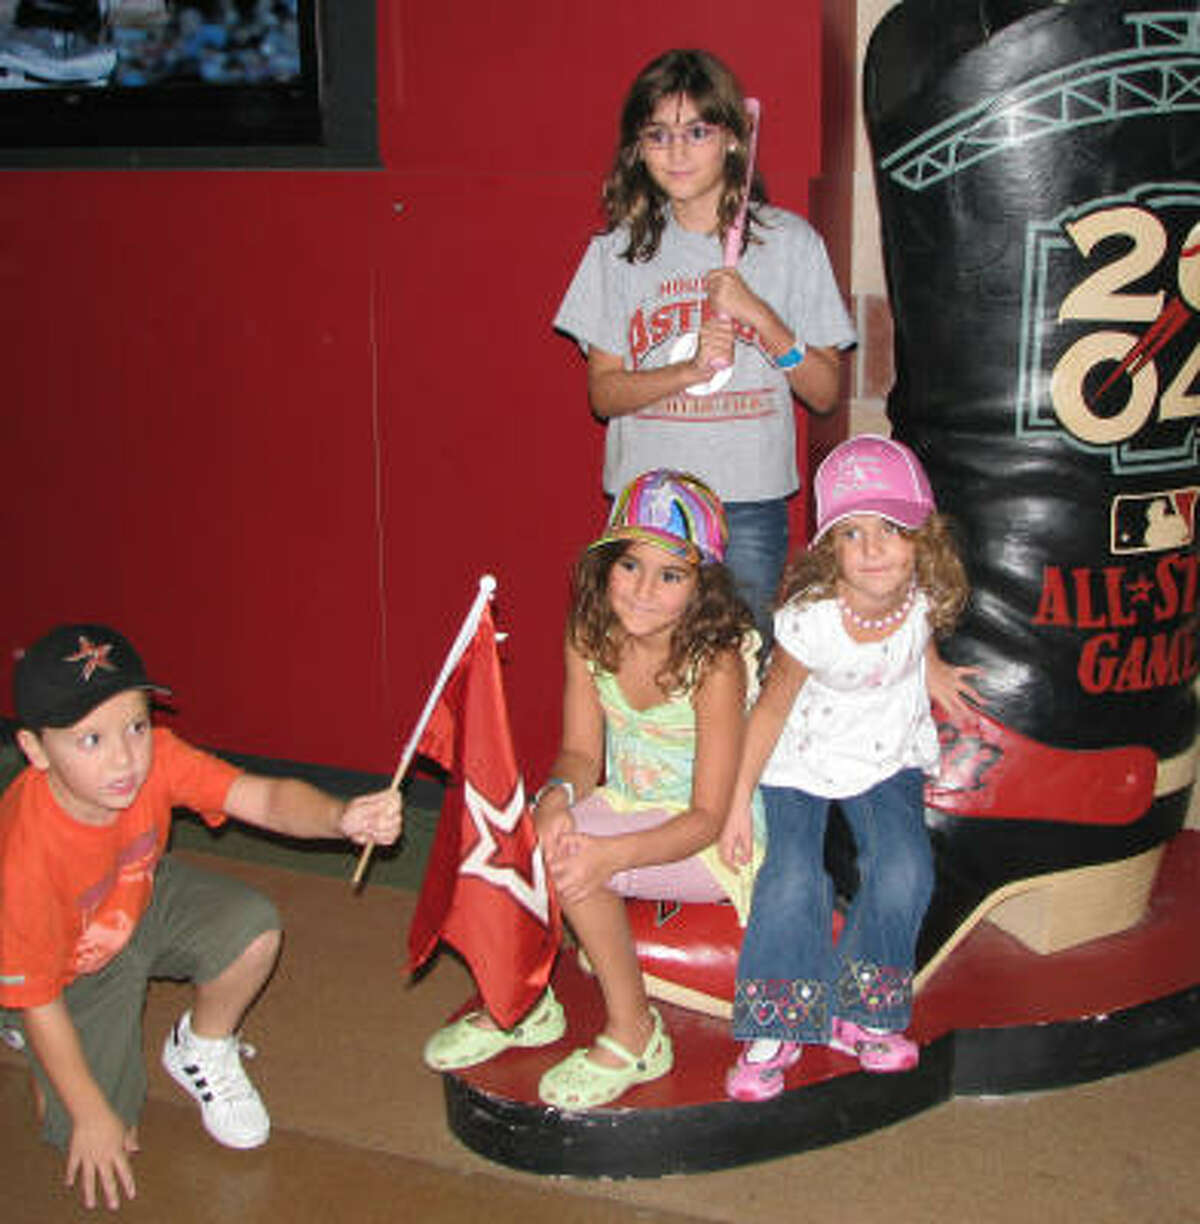 Game 2, Diamondbacks versus Astros, August 16, 2008: (From left) Jake Kolker, Sidney Daniels, Allison Daniels and Janey Daniels have taken a liking to this big boot.